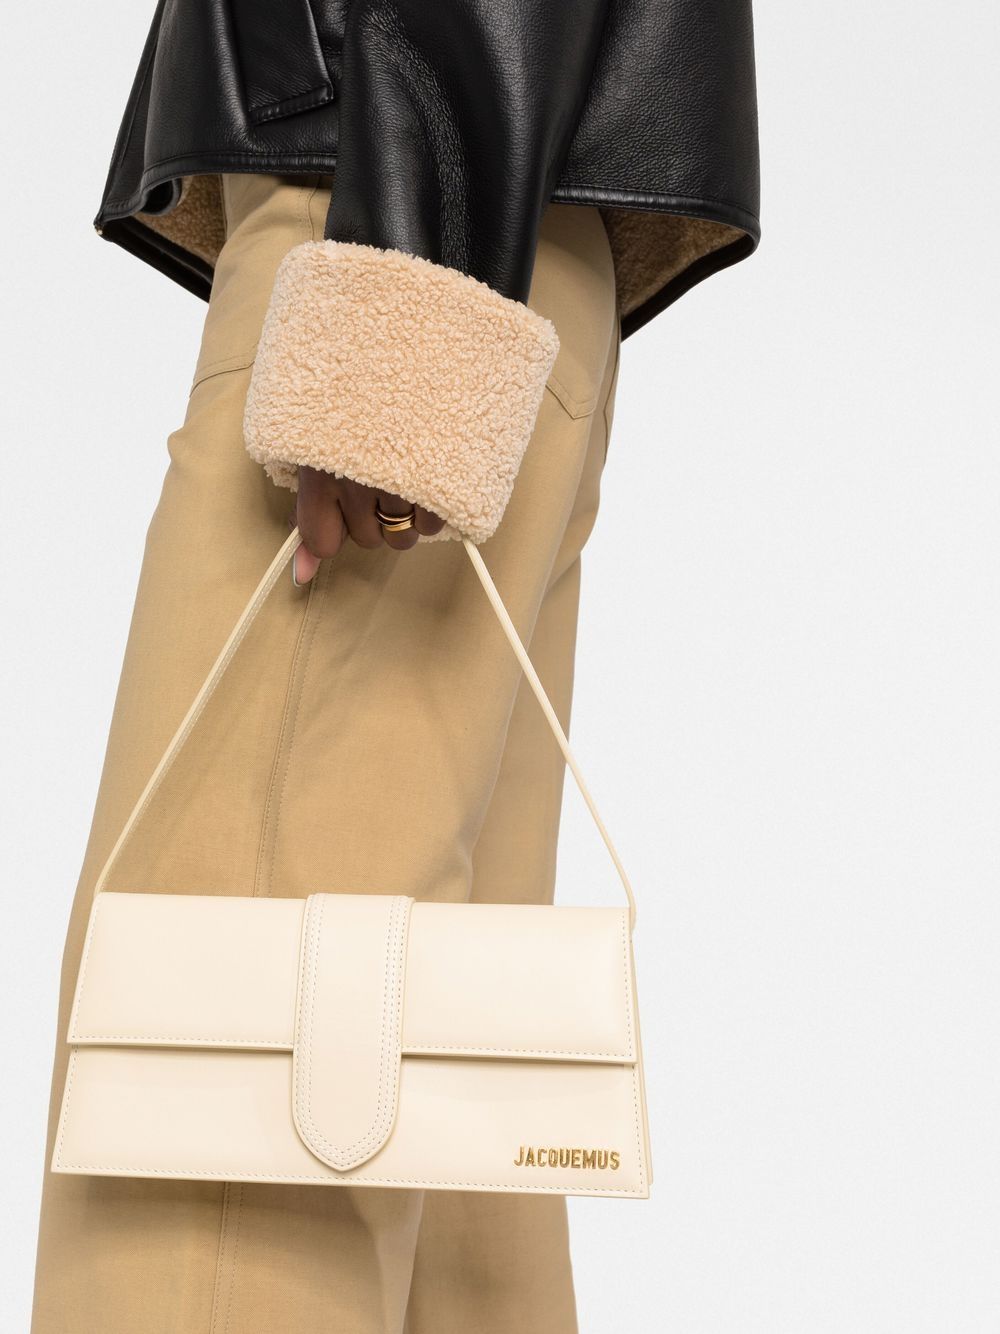 Jacquemus Le Bambino Long Osier Wicker Shoulder Bag, Ivory, Women's, Handbags & Purses Shoulder Bags